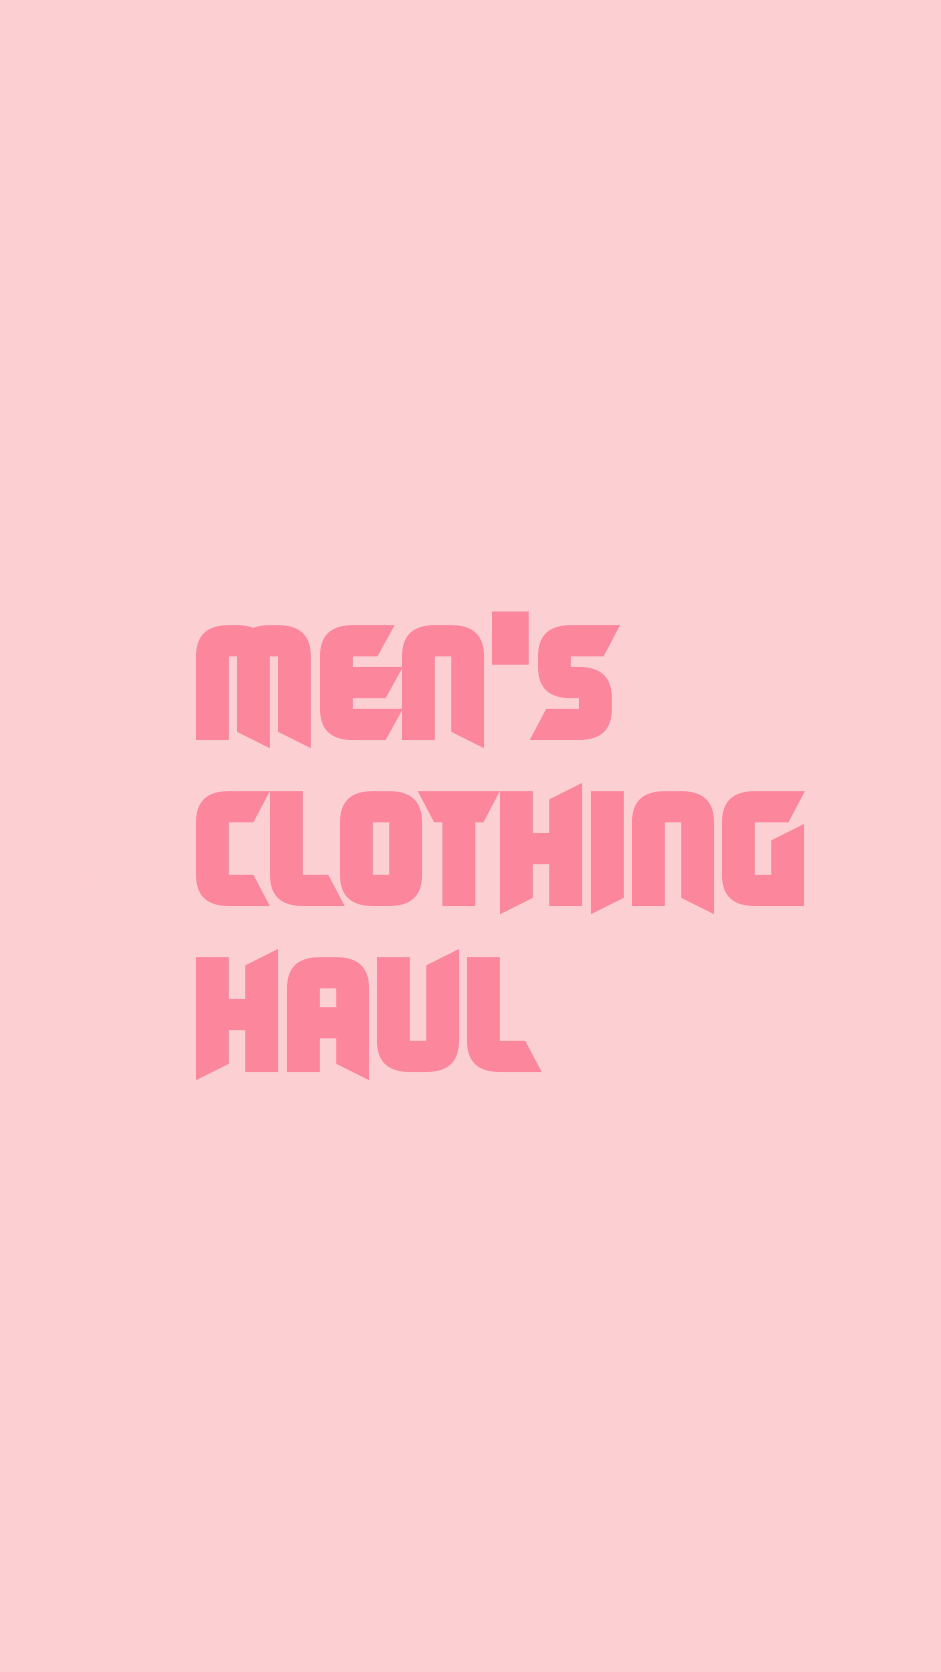 Men's clothing haul